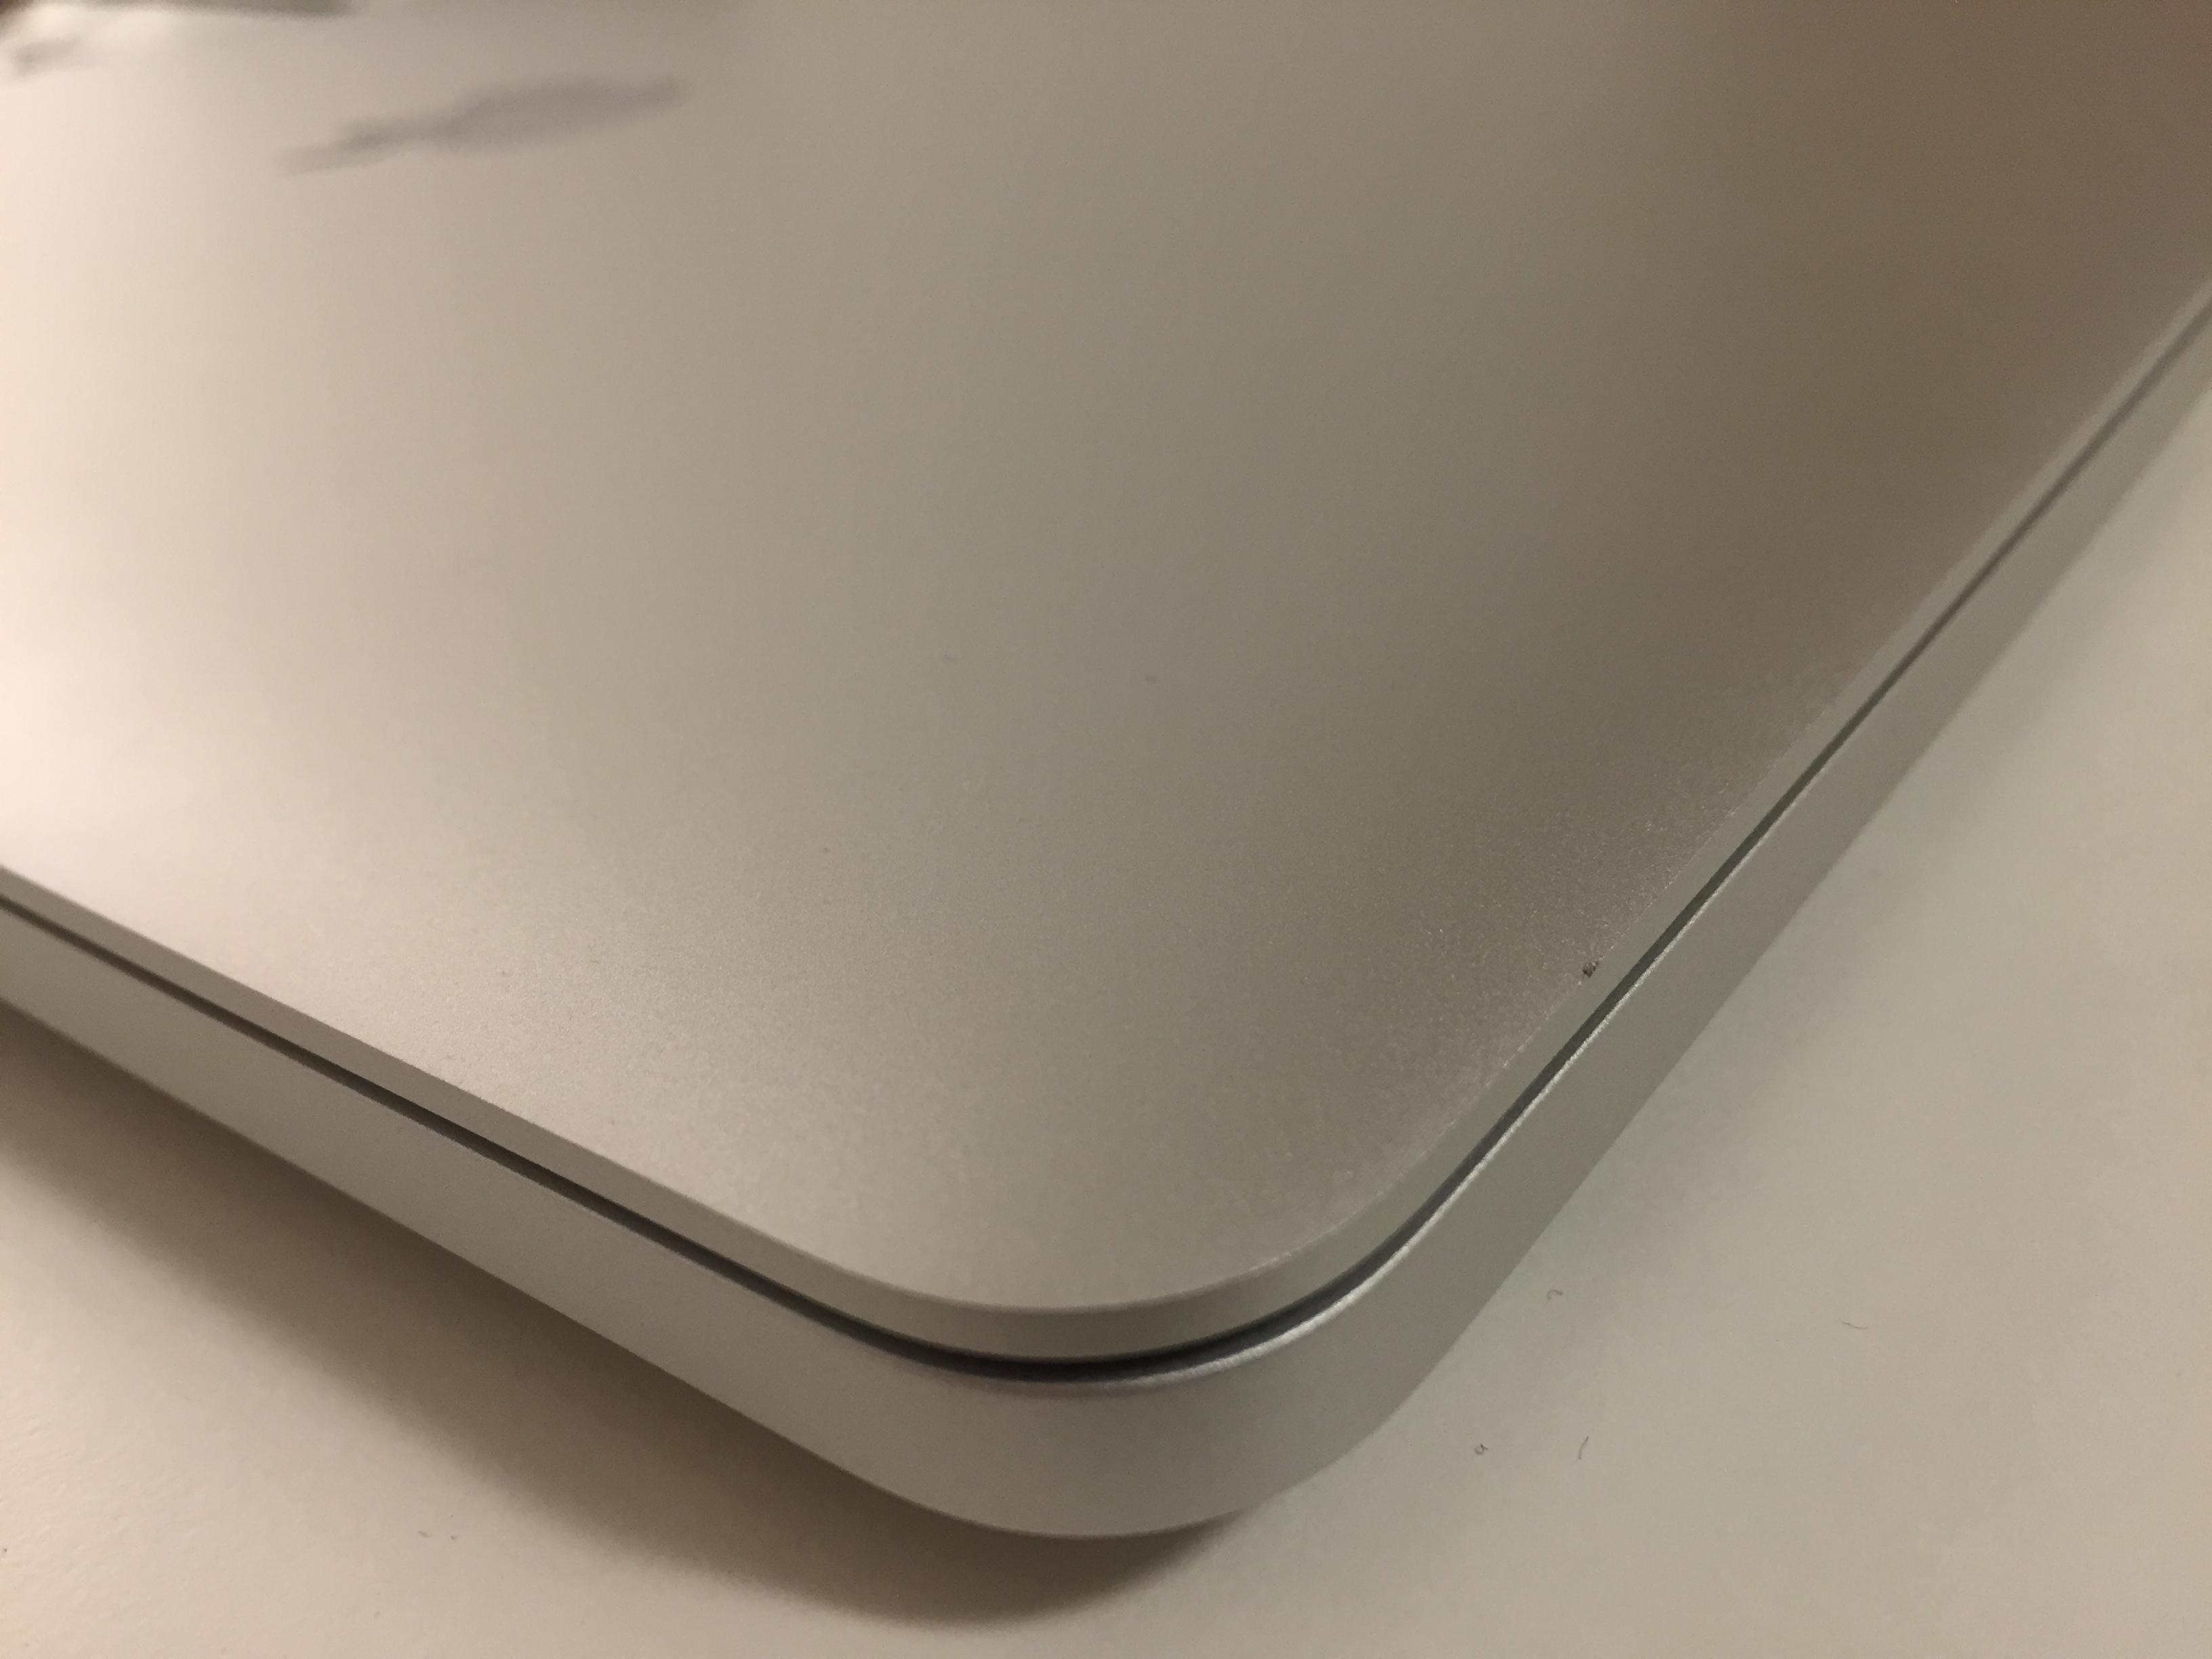 MacBook pro scratch - Apple Community